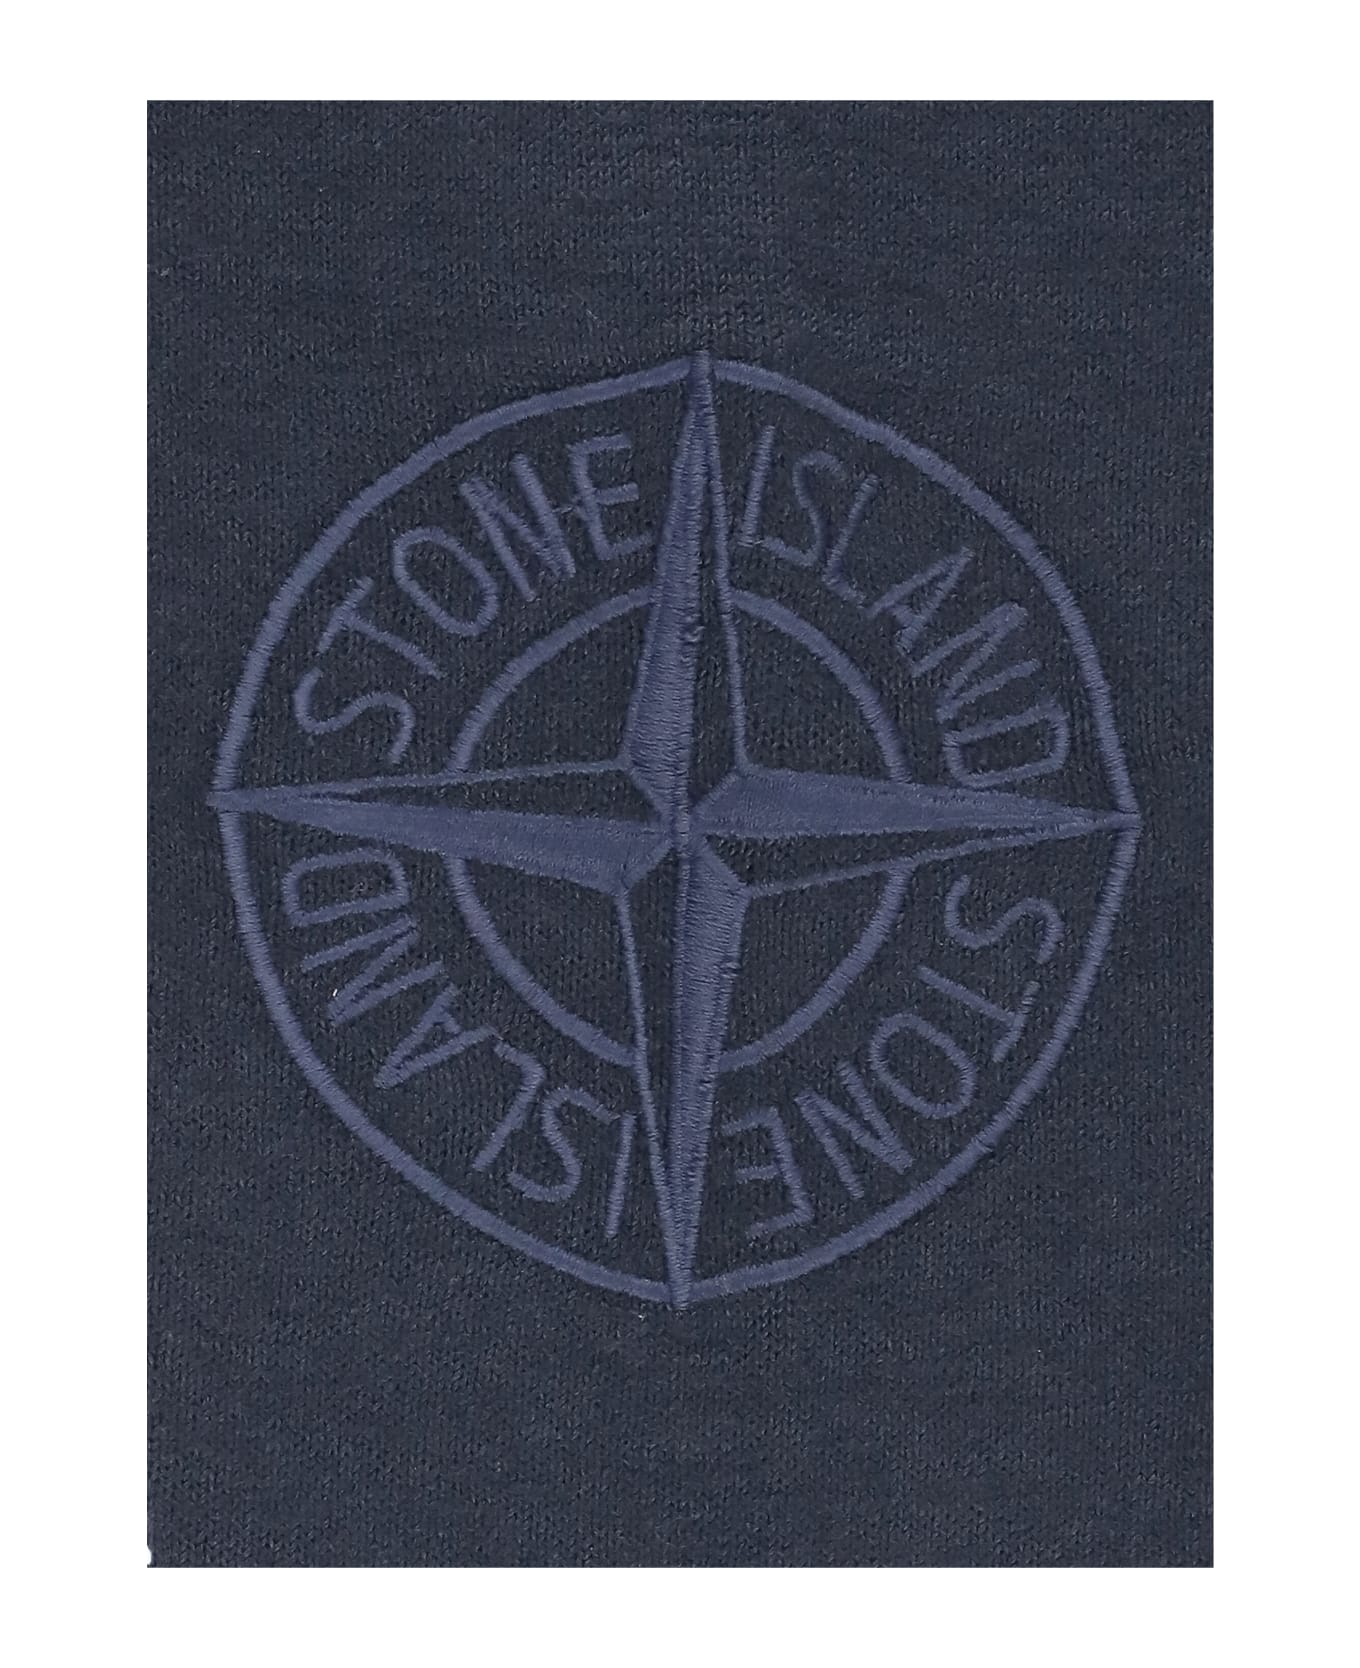 Stone Island Cotton Sweater With Logo - Blue ニットウェア＆スウェットシャツ